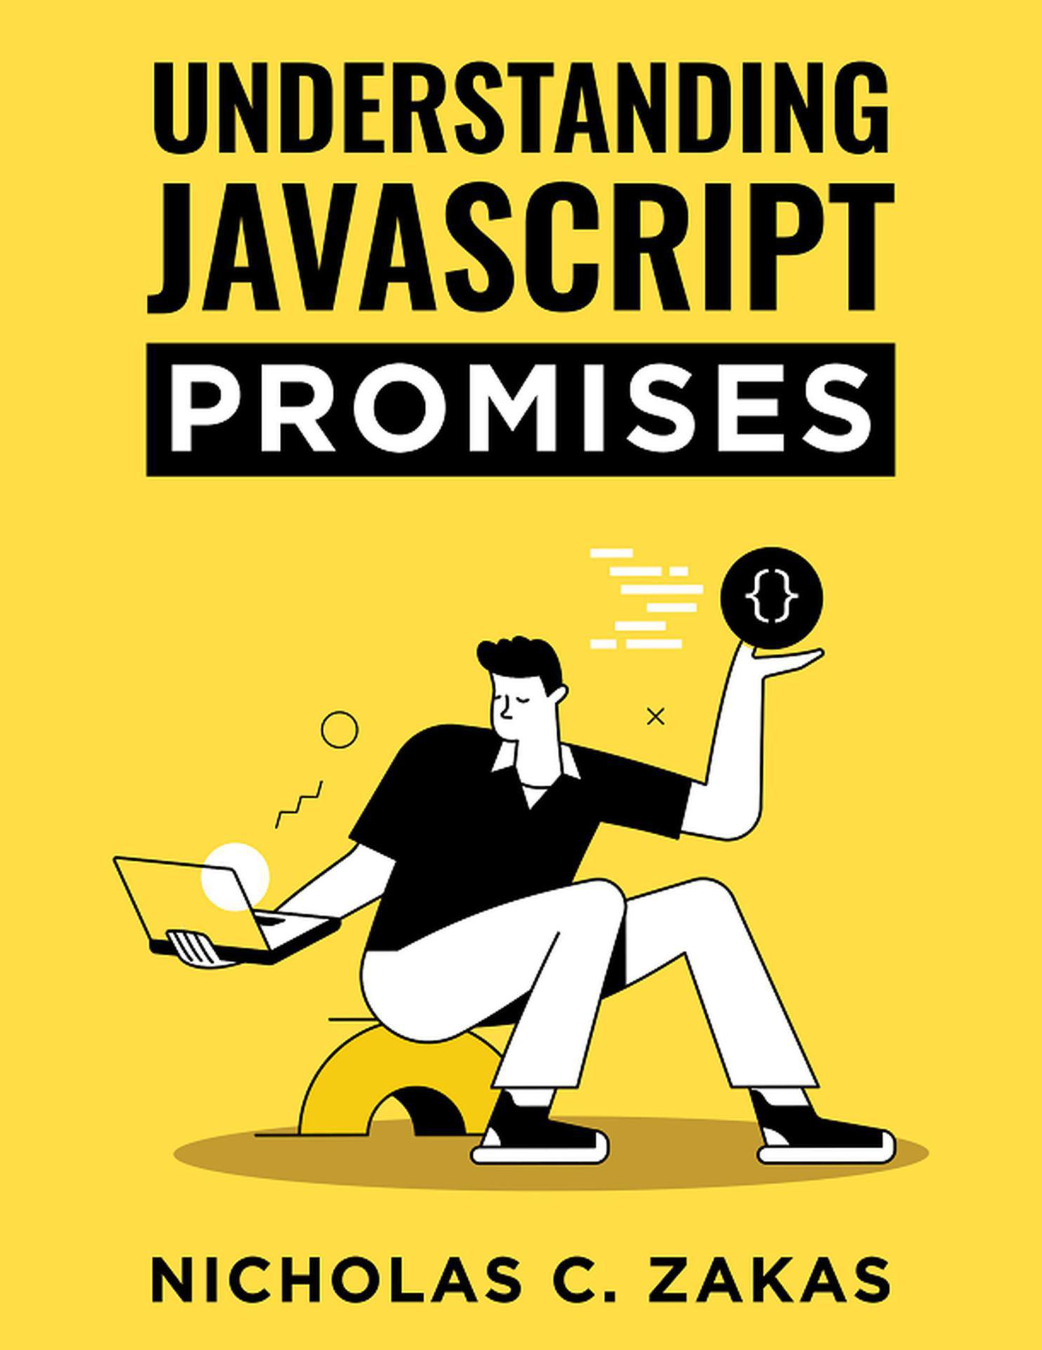 20 Best JavaScript Books for Web Developers in 2023